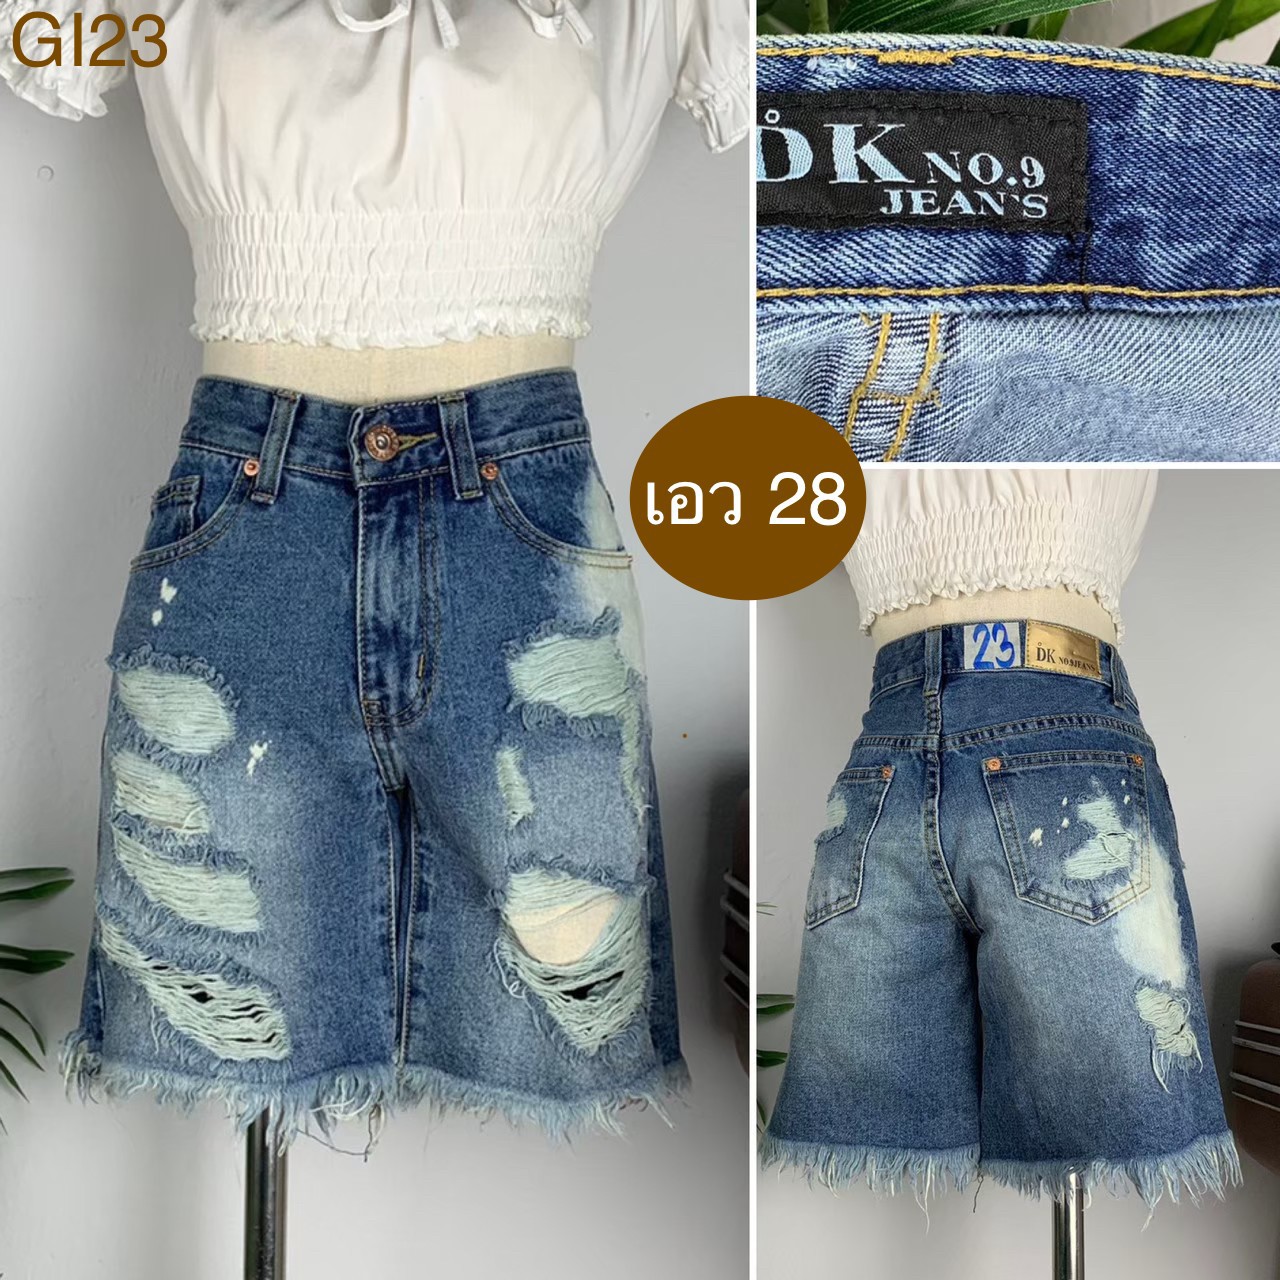 ♥️ รหัสGI23 ▪️ป้าย DK No.9 Jeans  ▪️ เอว 28" สะโพก 36" ต้นขา 20" ▪️เป้า 9.5" ยาว 15.5" (นิ้ว)